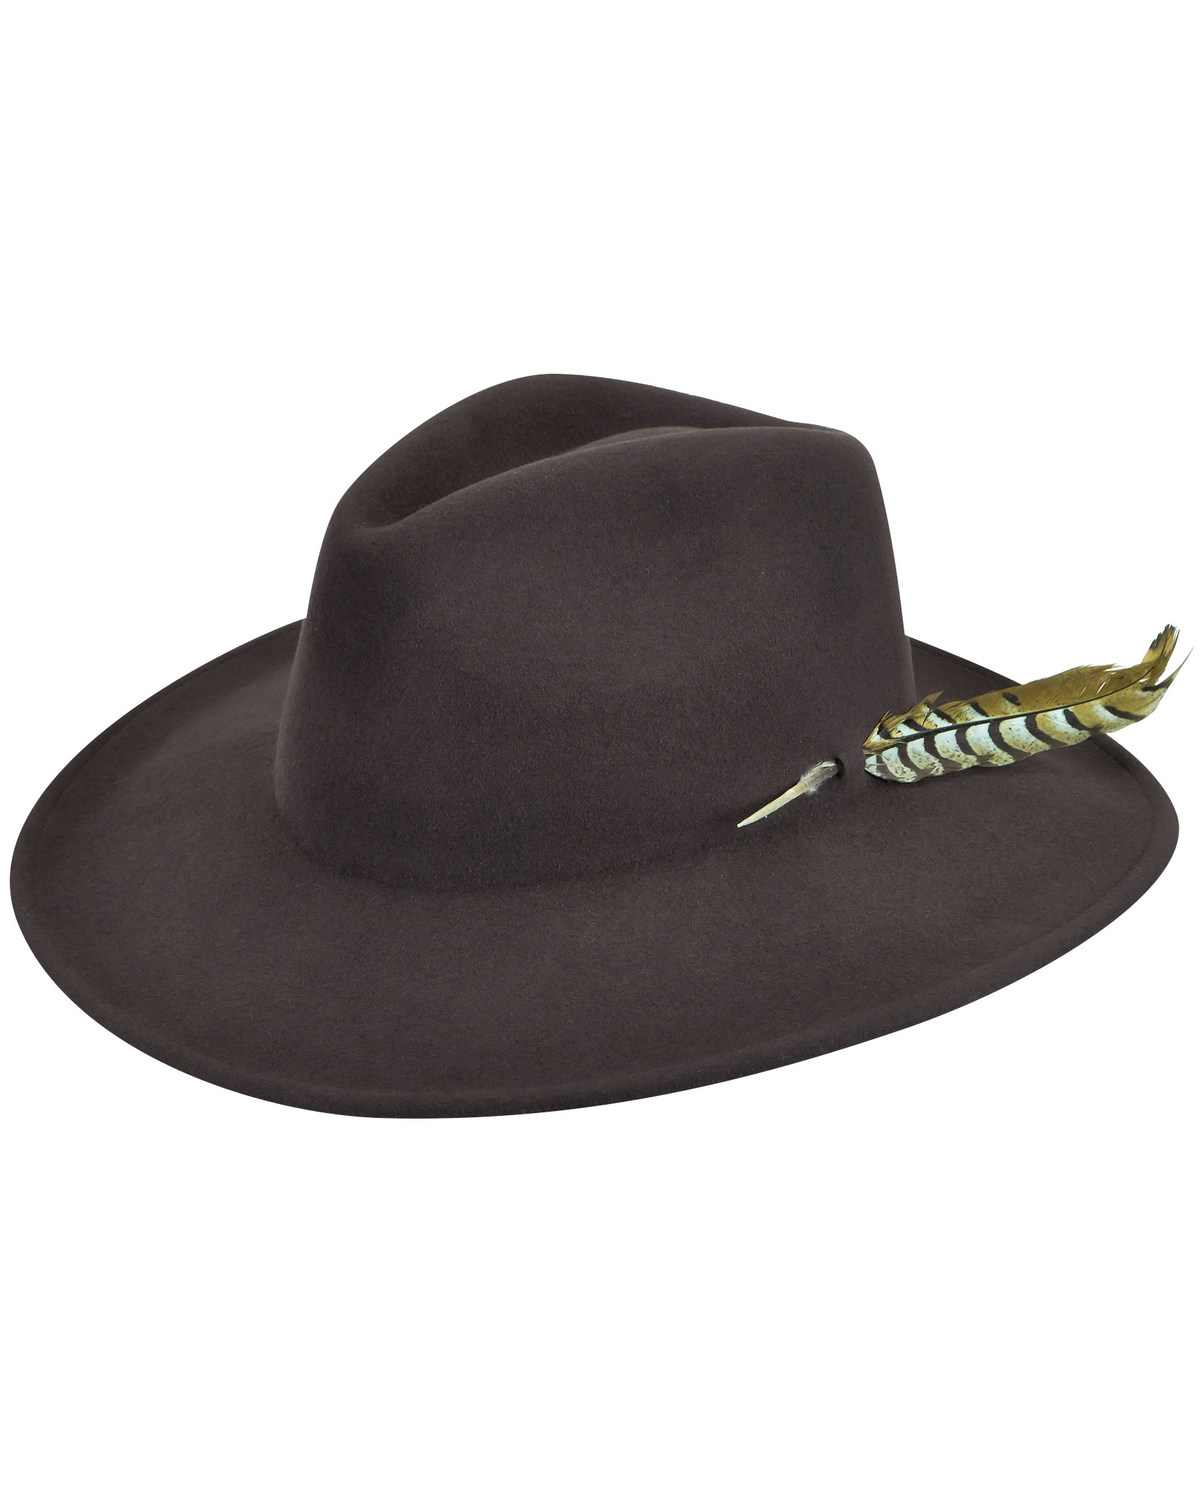 Renegade by Bailey Men's Calico Felt Western Fashion Hat